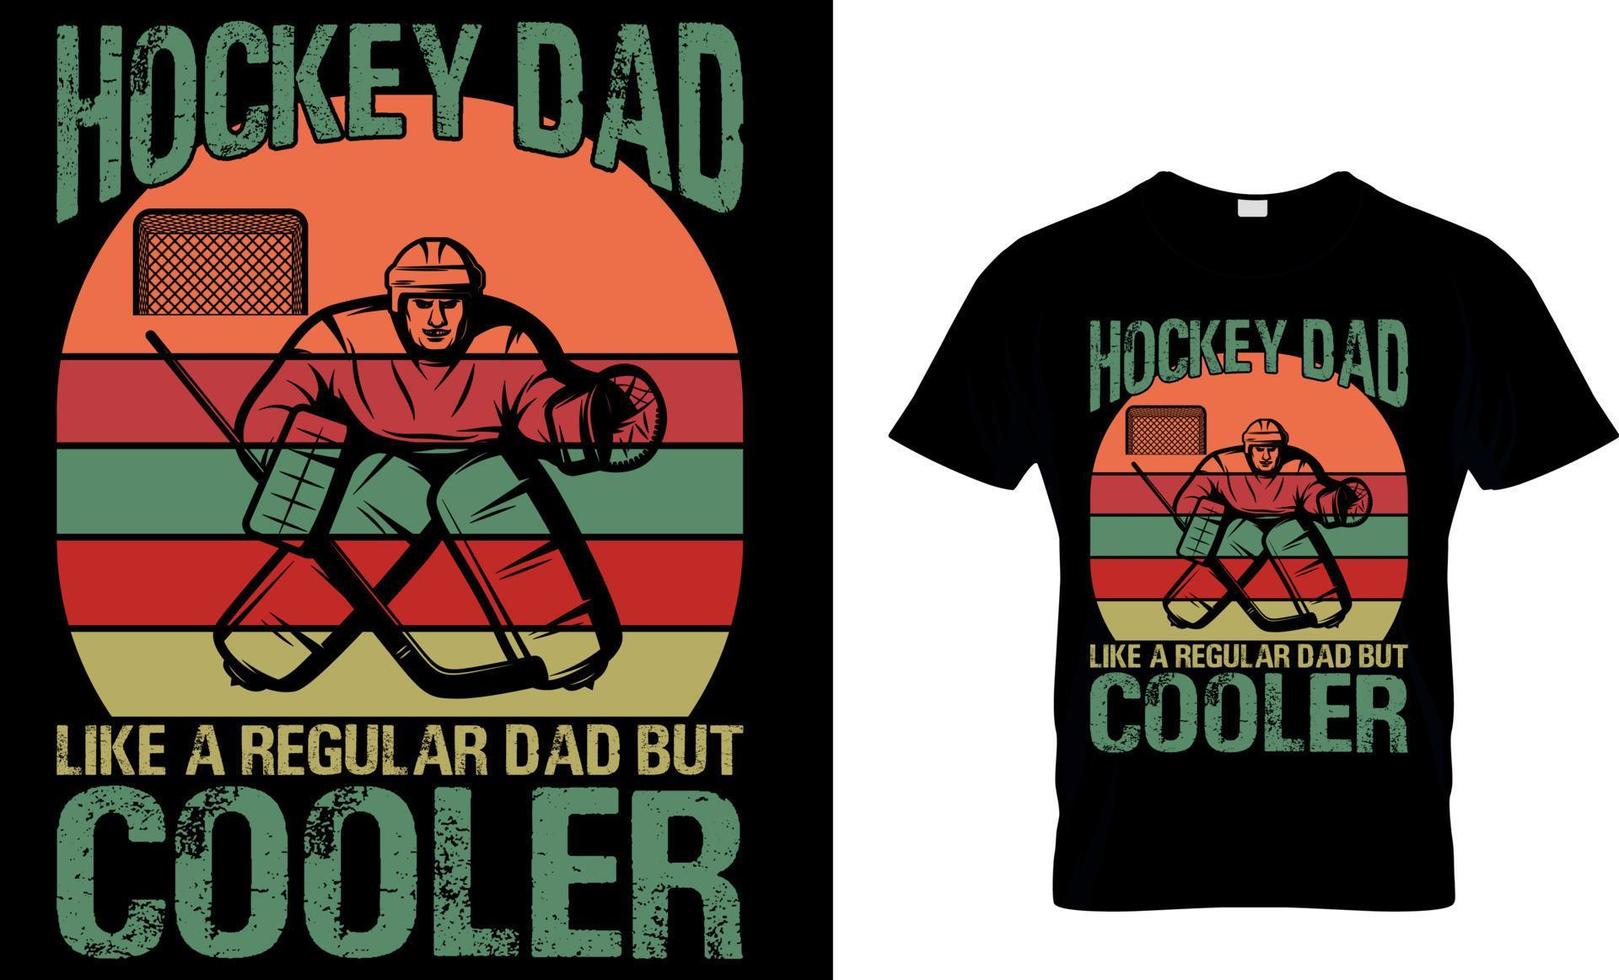 Ice hockey T-shirt design vector Graphic. hockey dad like a regular dad but cooler.